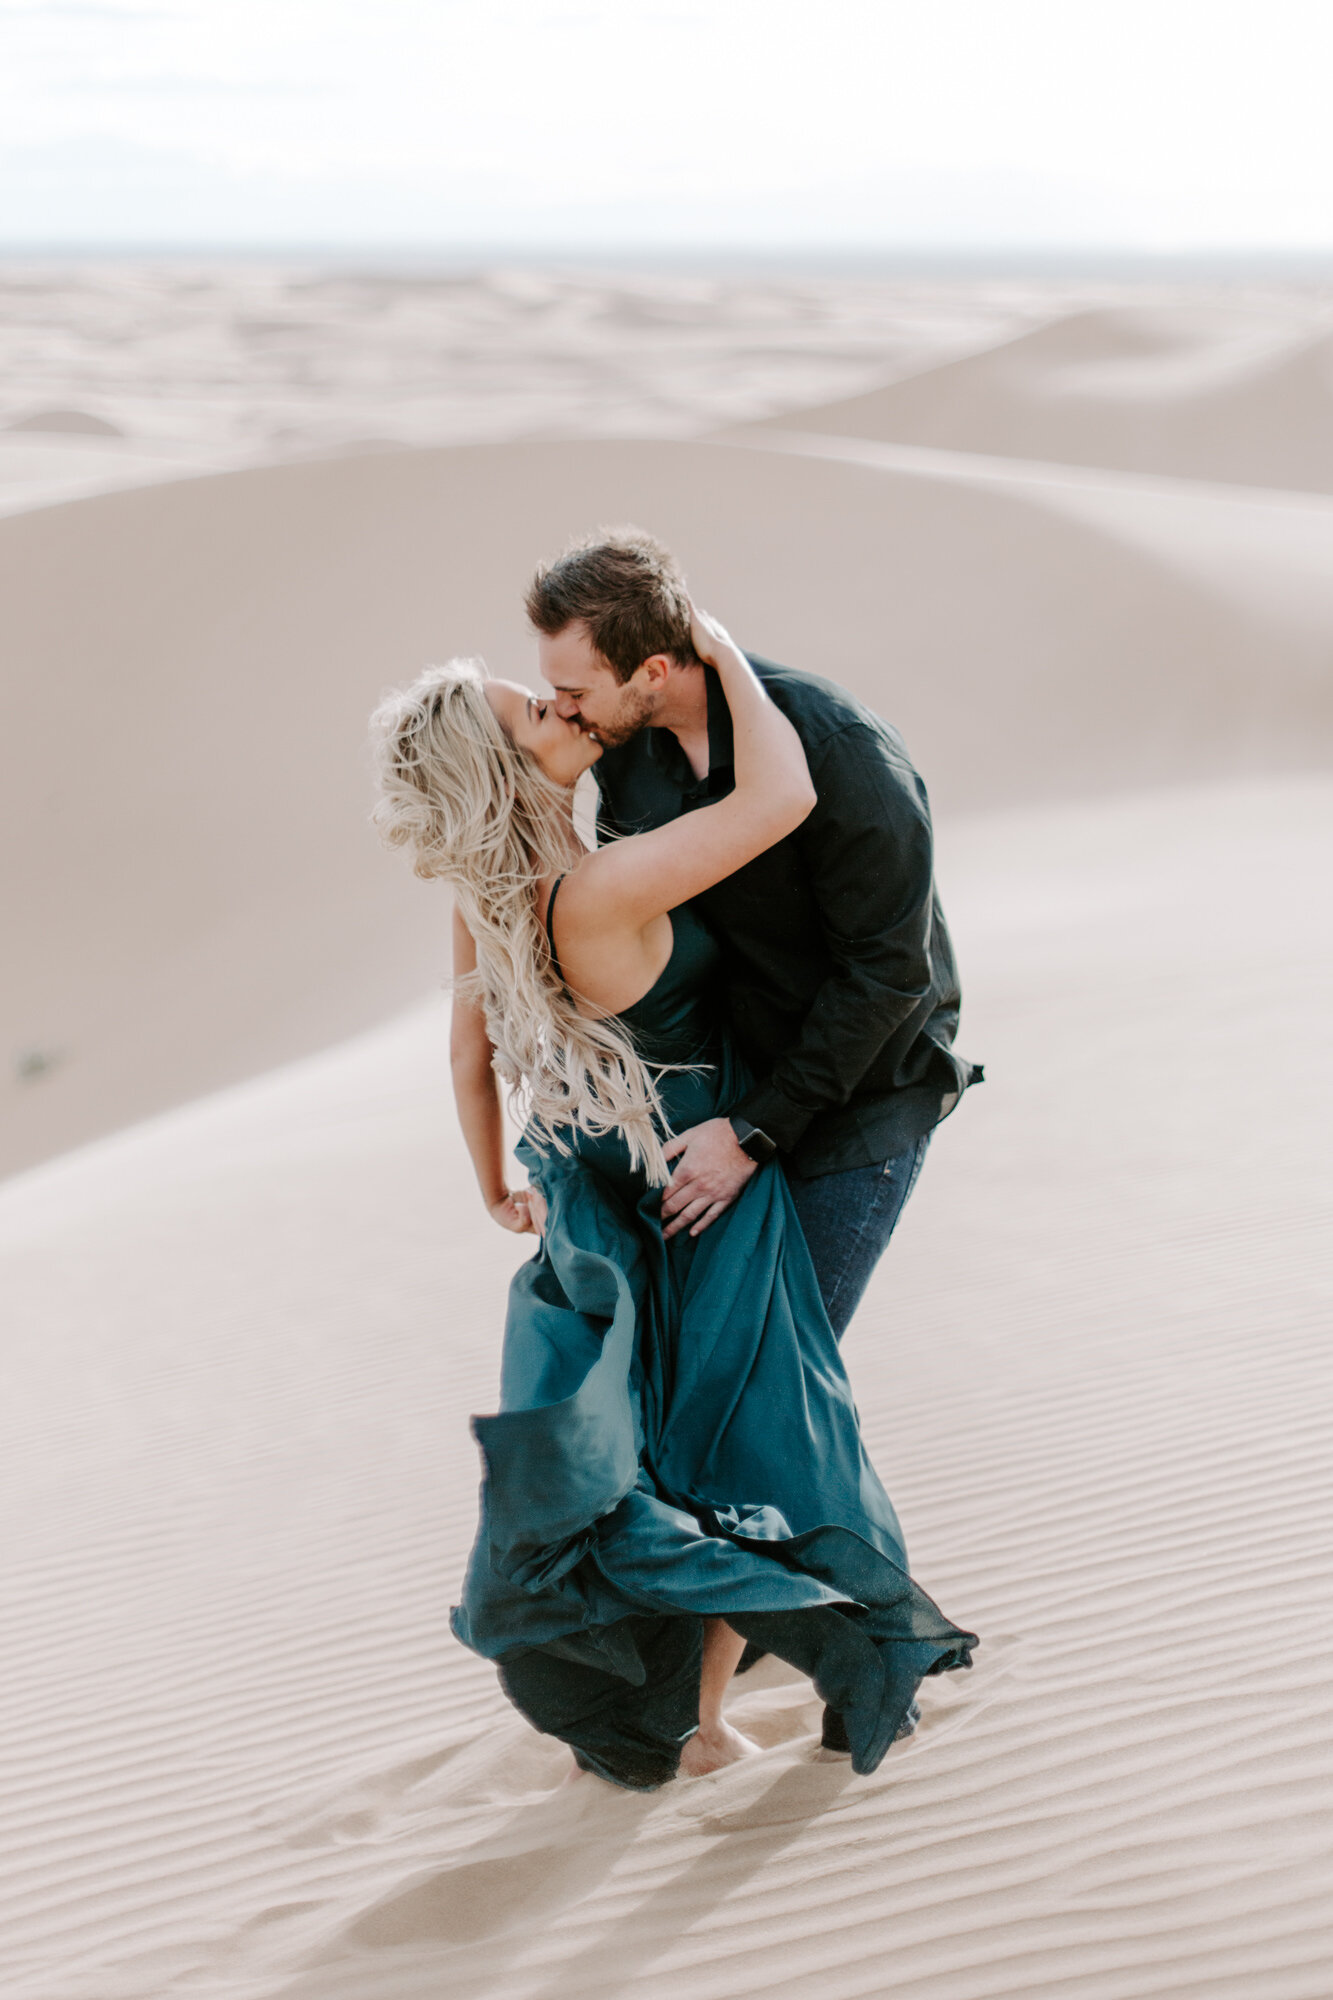 Glamis Sand dune engagement session, engagment photography, Kara Reynolds wedding photograher_-14.jpg